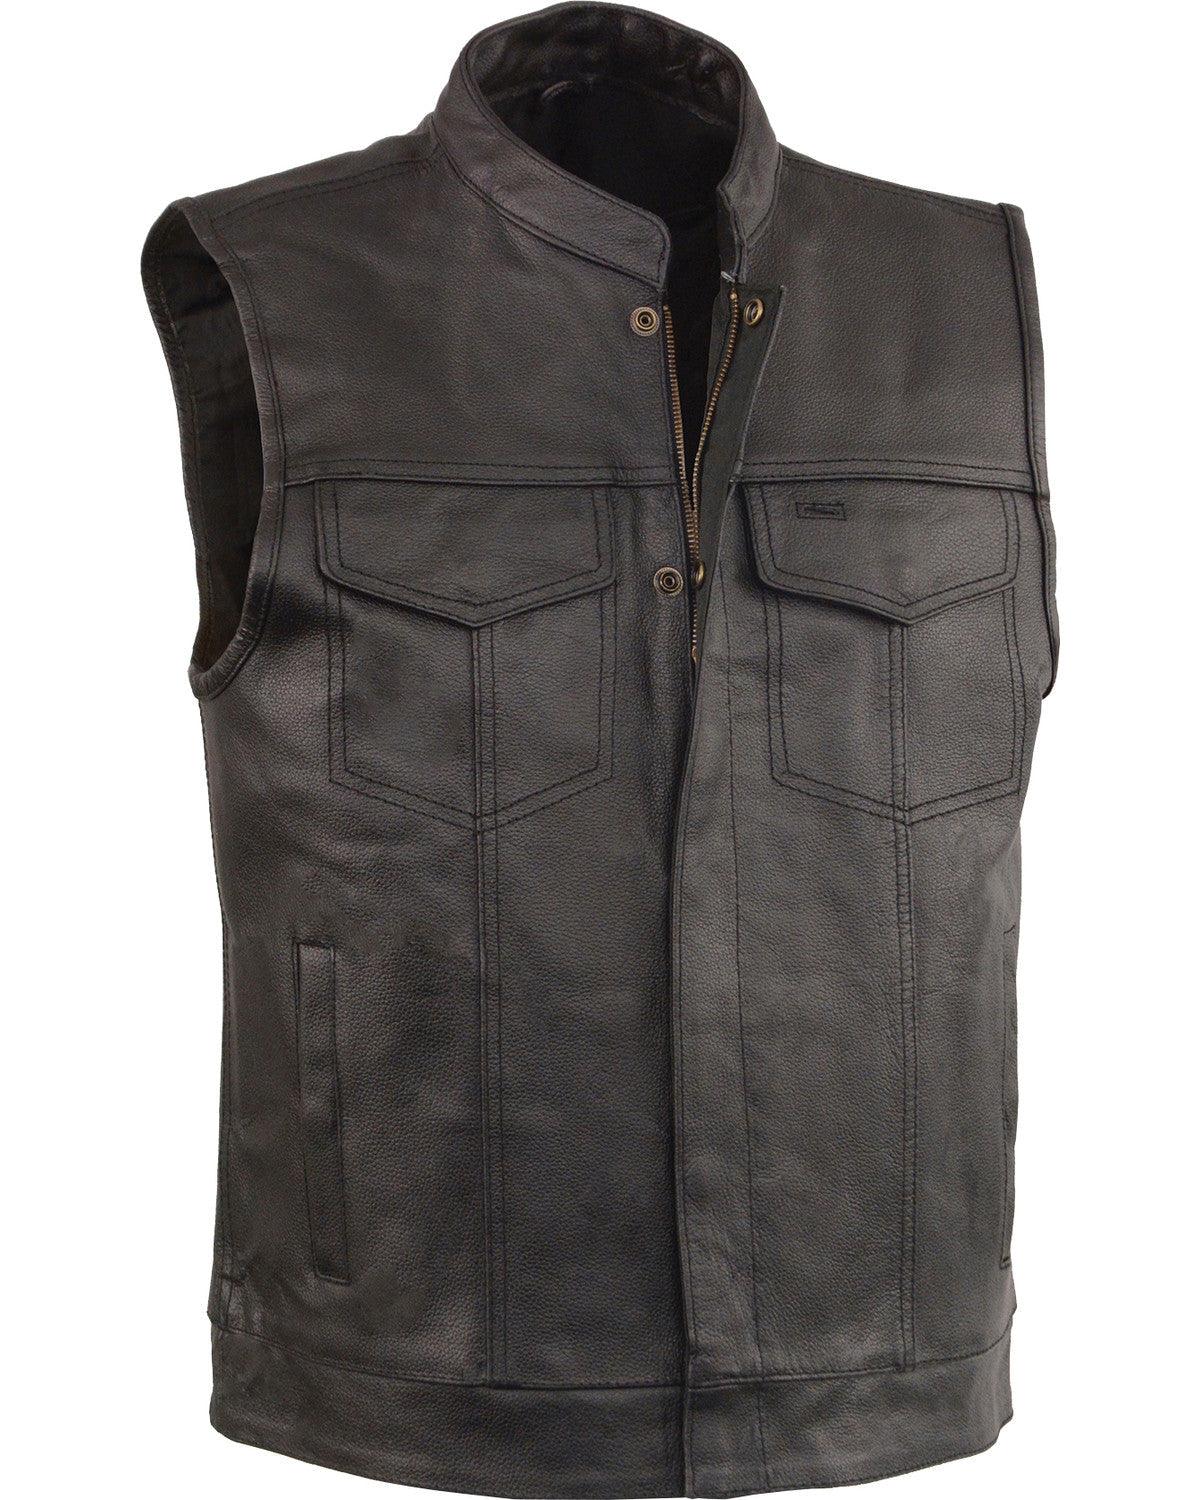 Black Open Neck Club Style Vest - Leather Loom